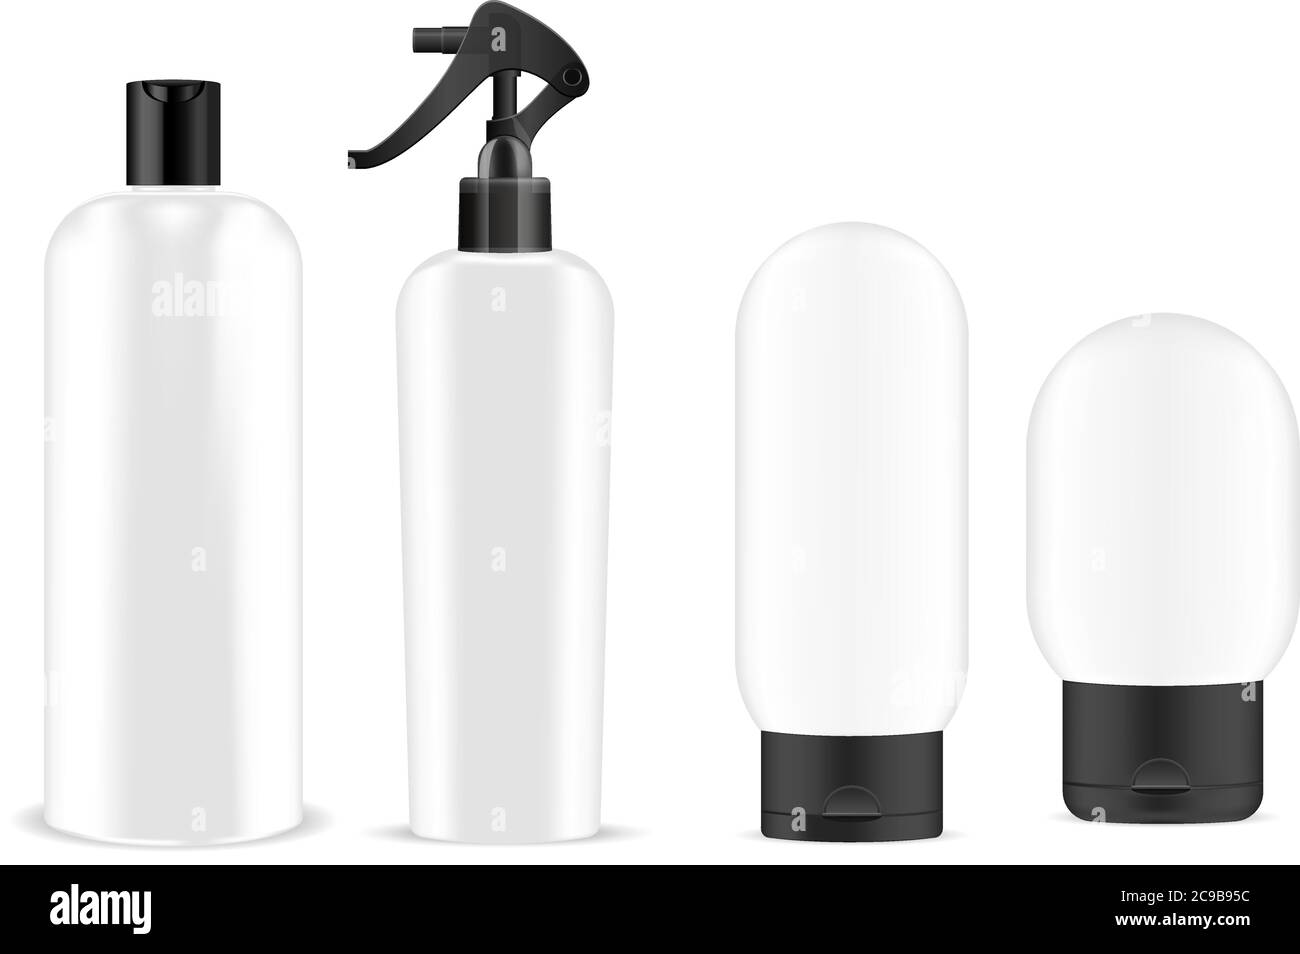 Big White Cosmetics Sprayer And Shampoo Bottles Mockup Set Black Pump Dispenser And Lid